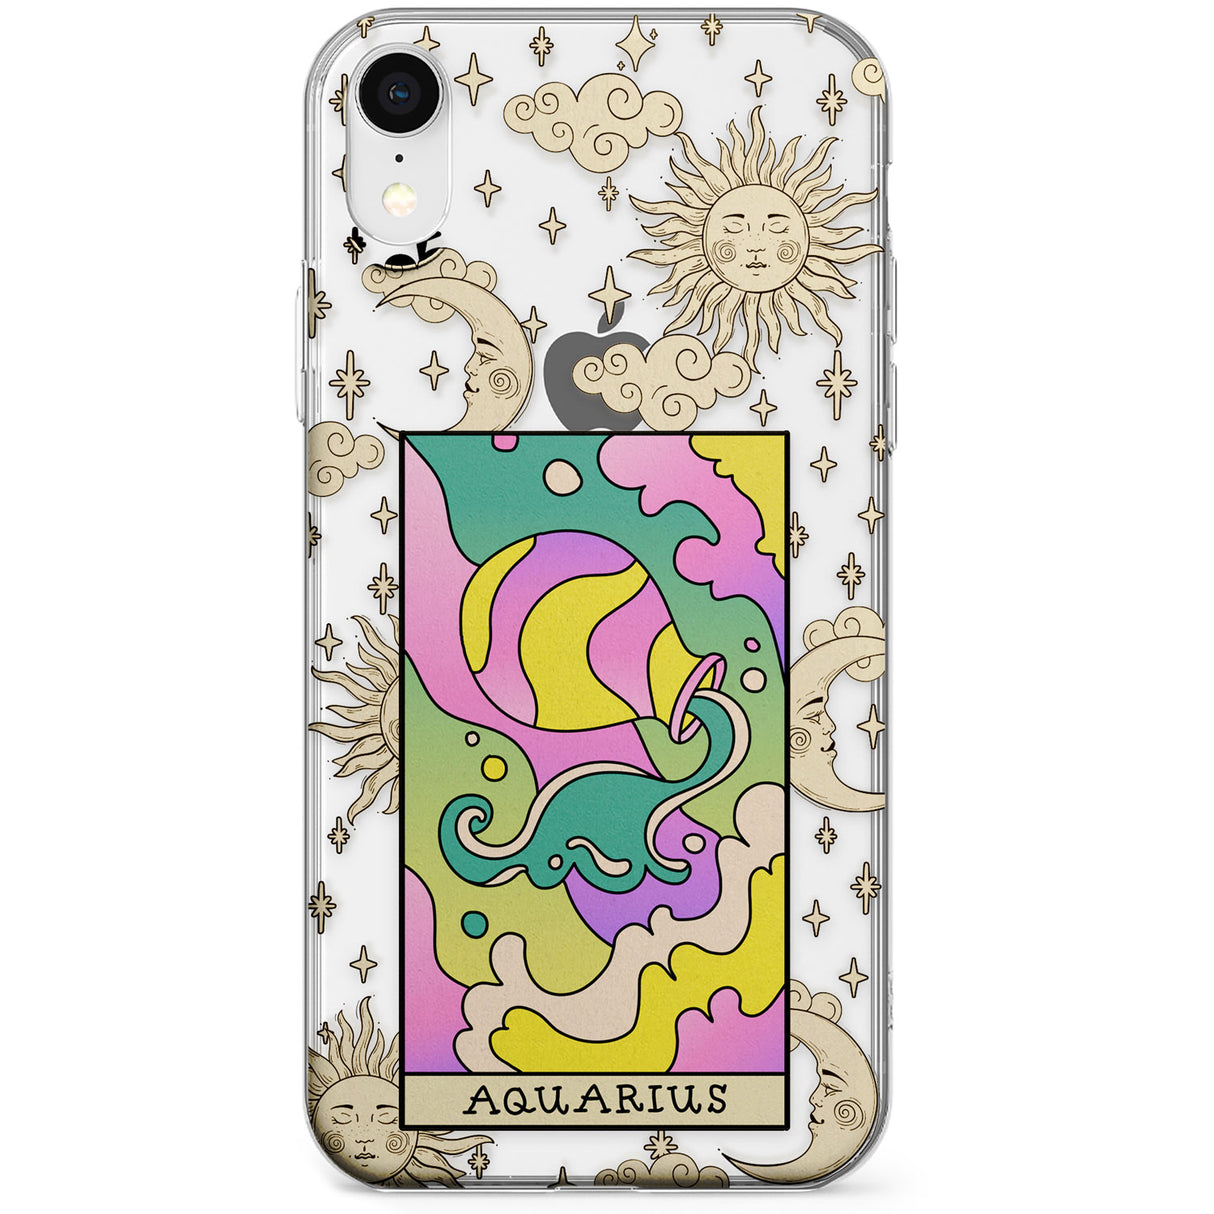 Celestial Zodiac - Aquarius Phone Case for iPhone X, XS Max, XR